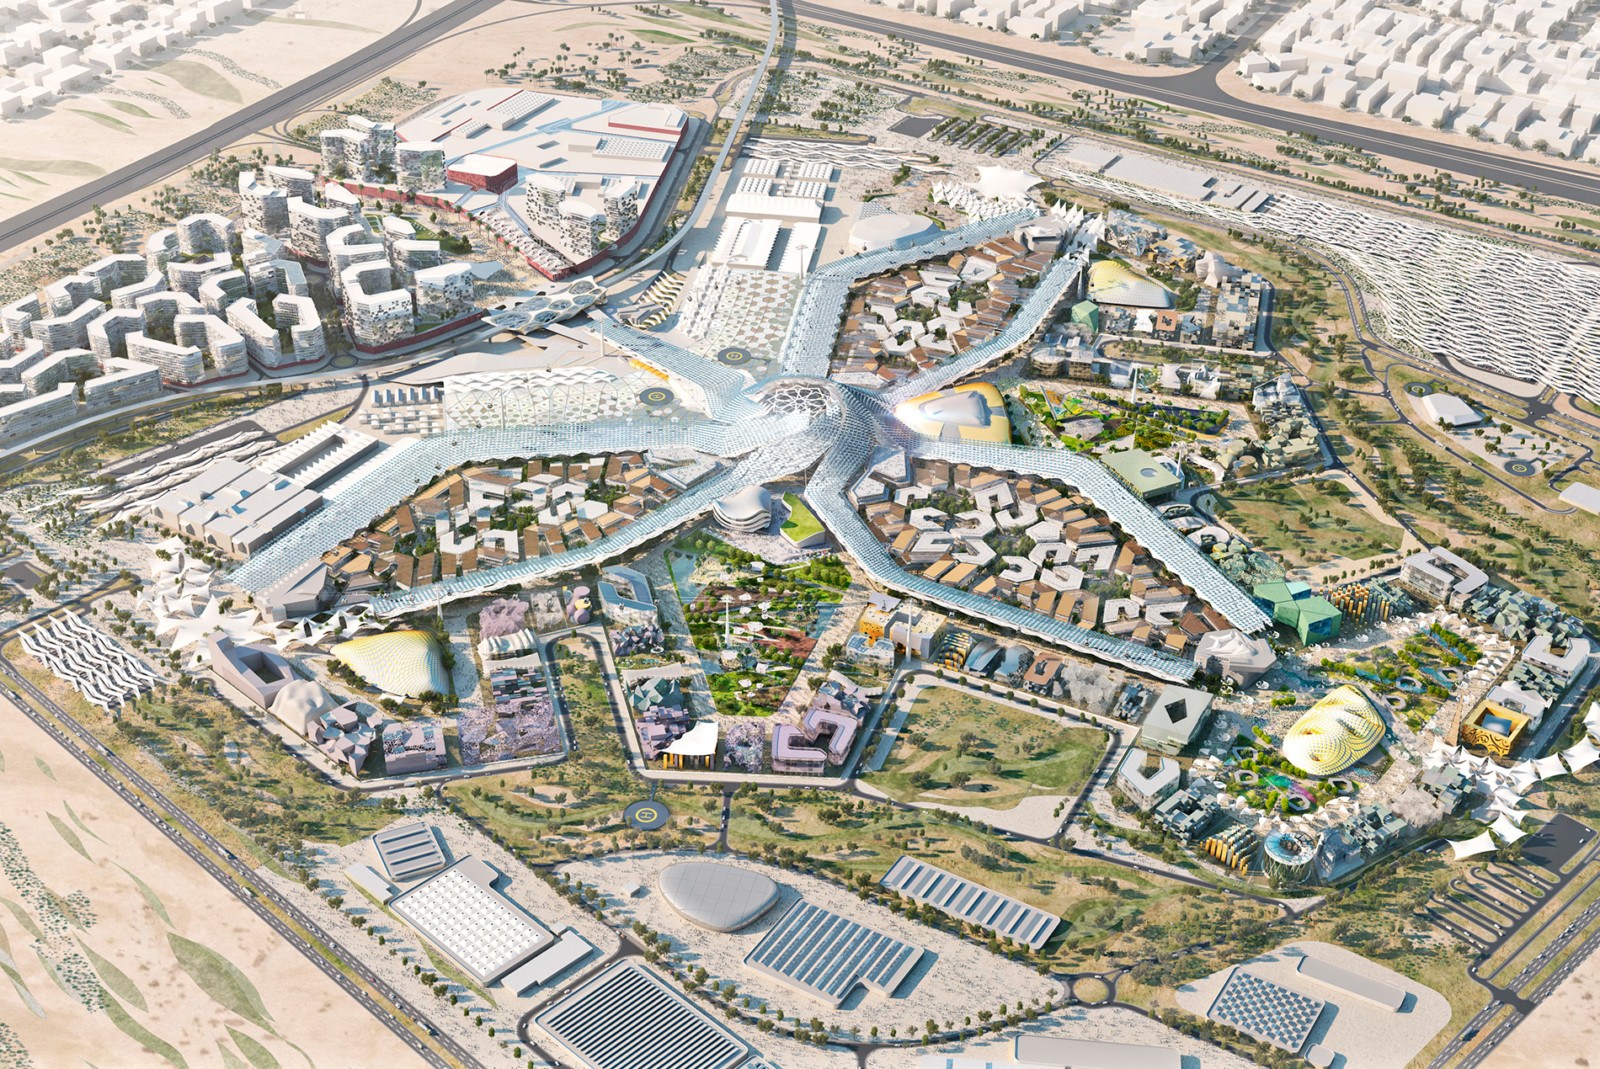 Expo 2020 Dubai Master Plan Leaves a Legacy - HOK